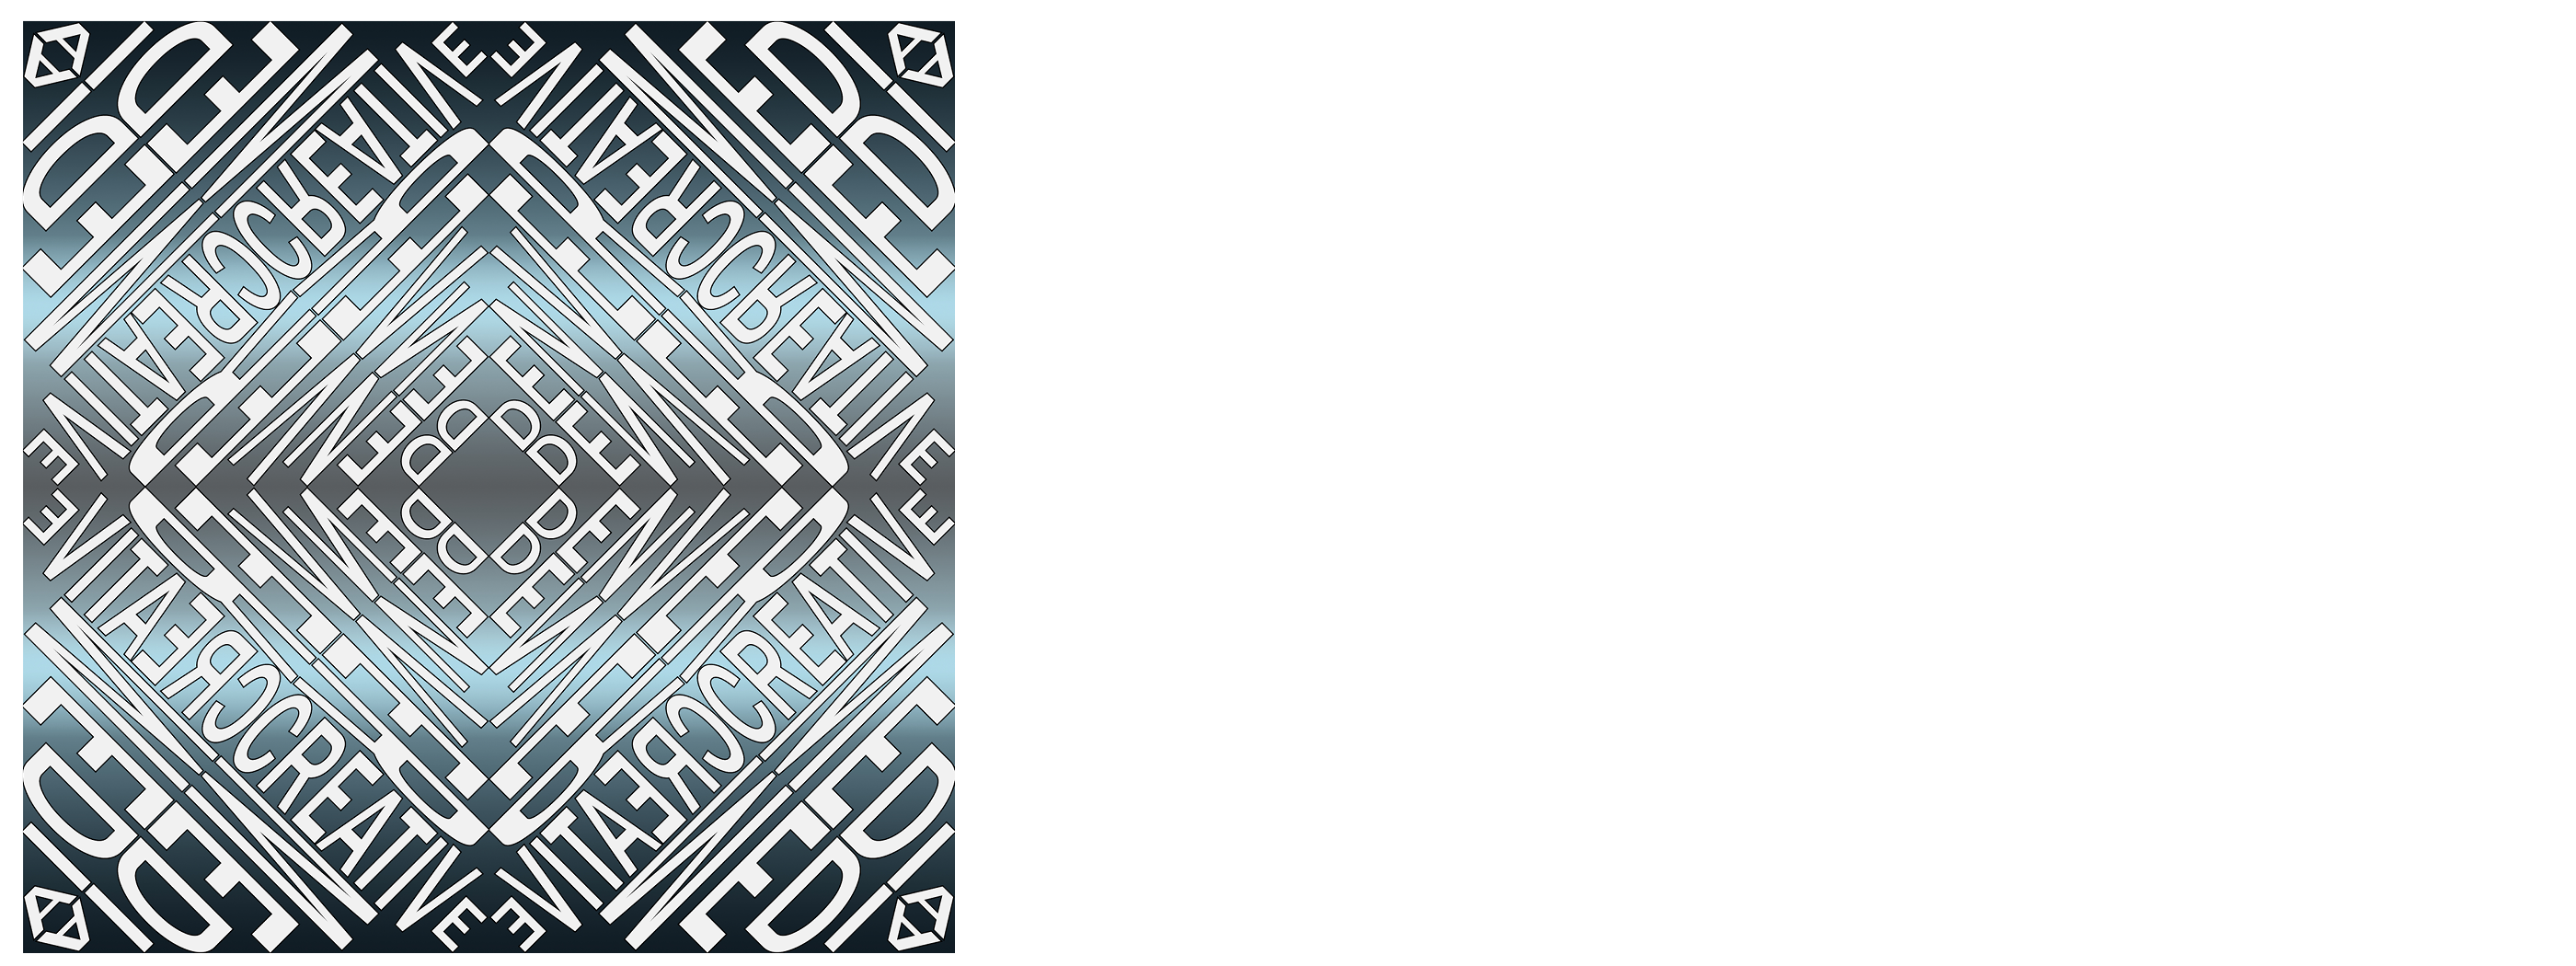 Denver Creative Media Website Design, Photography, Graphic Design